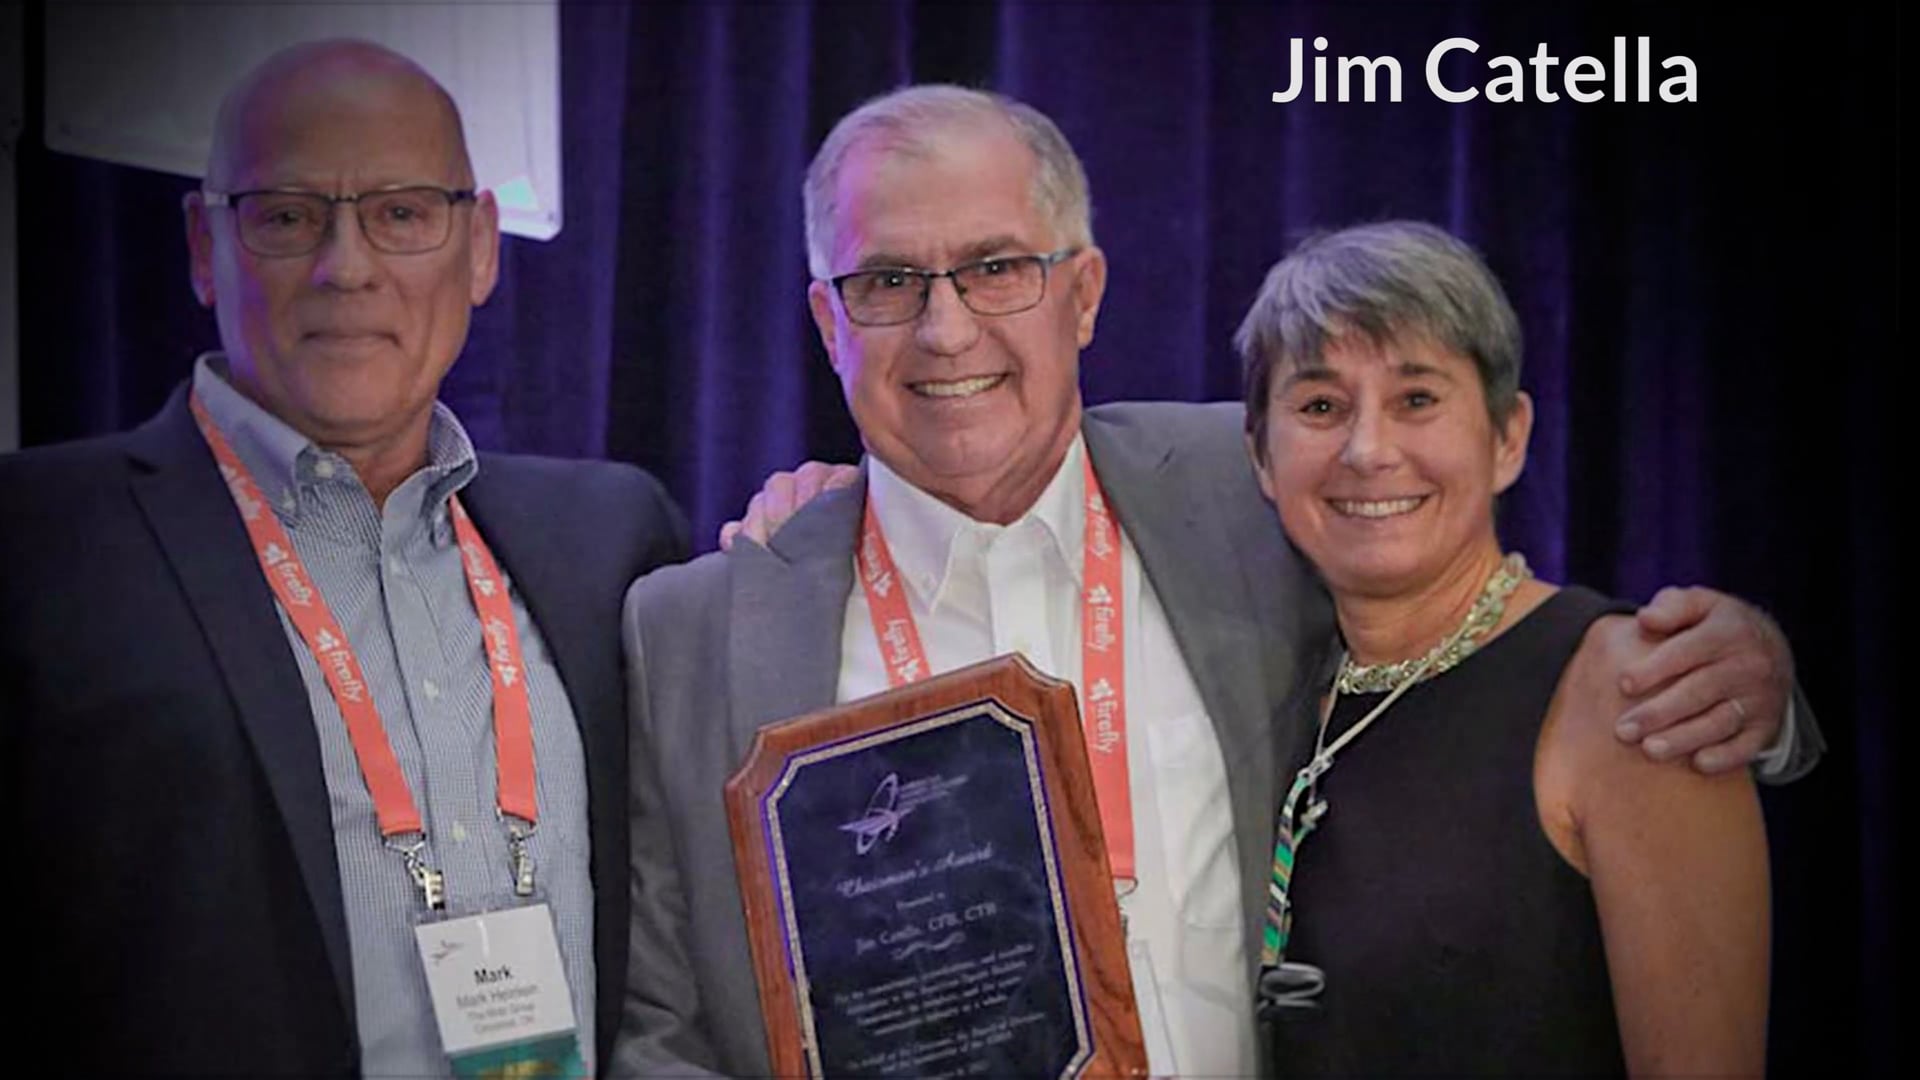 Jim Catella Wins ASBA's 2021 Chairman's Award